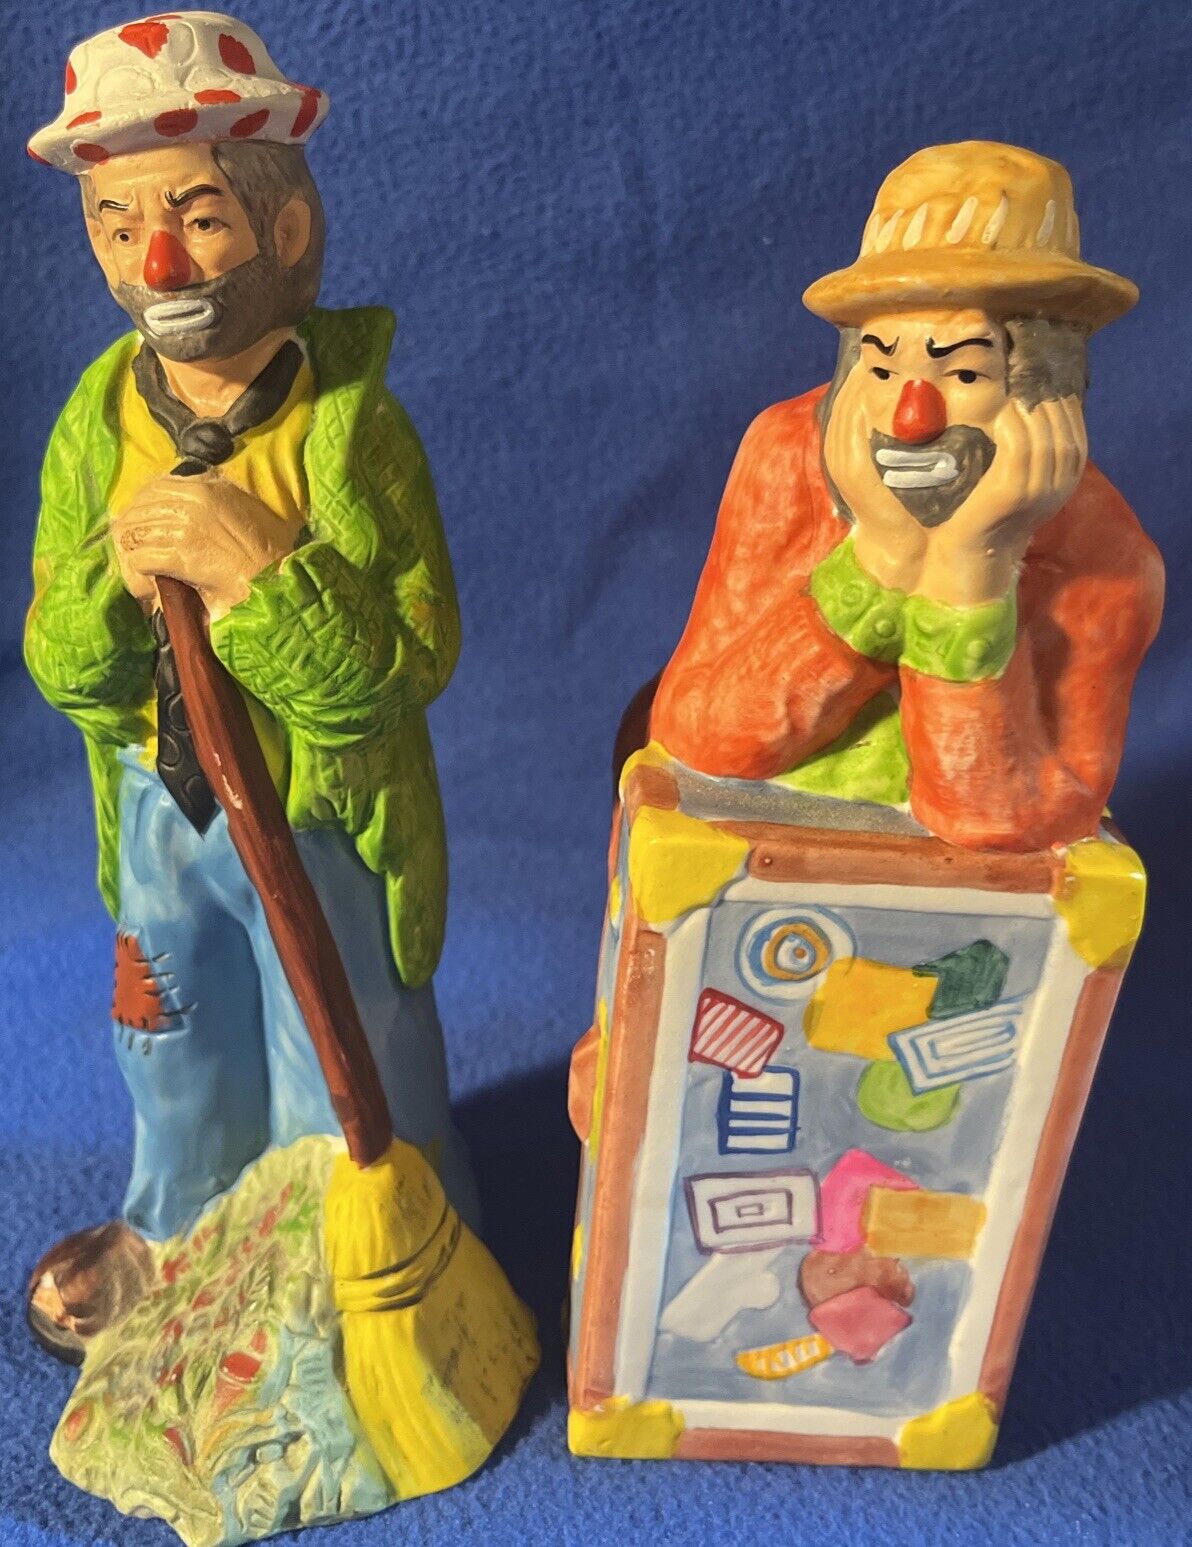 2 Vintage Emmett Kelley Jr. Hobo Clown Figures